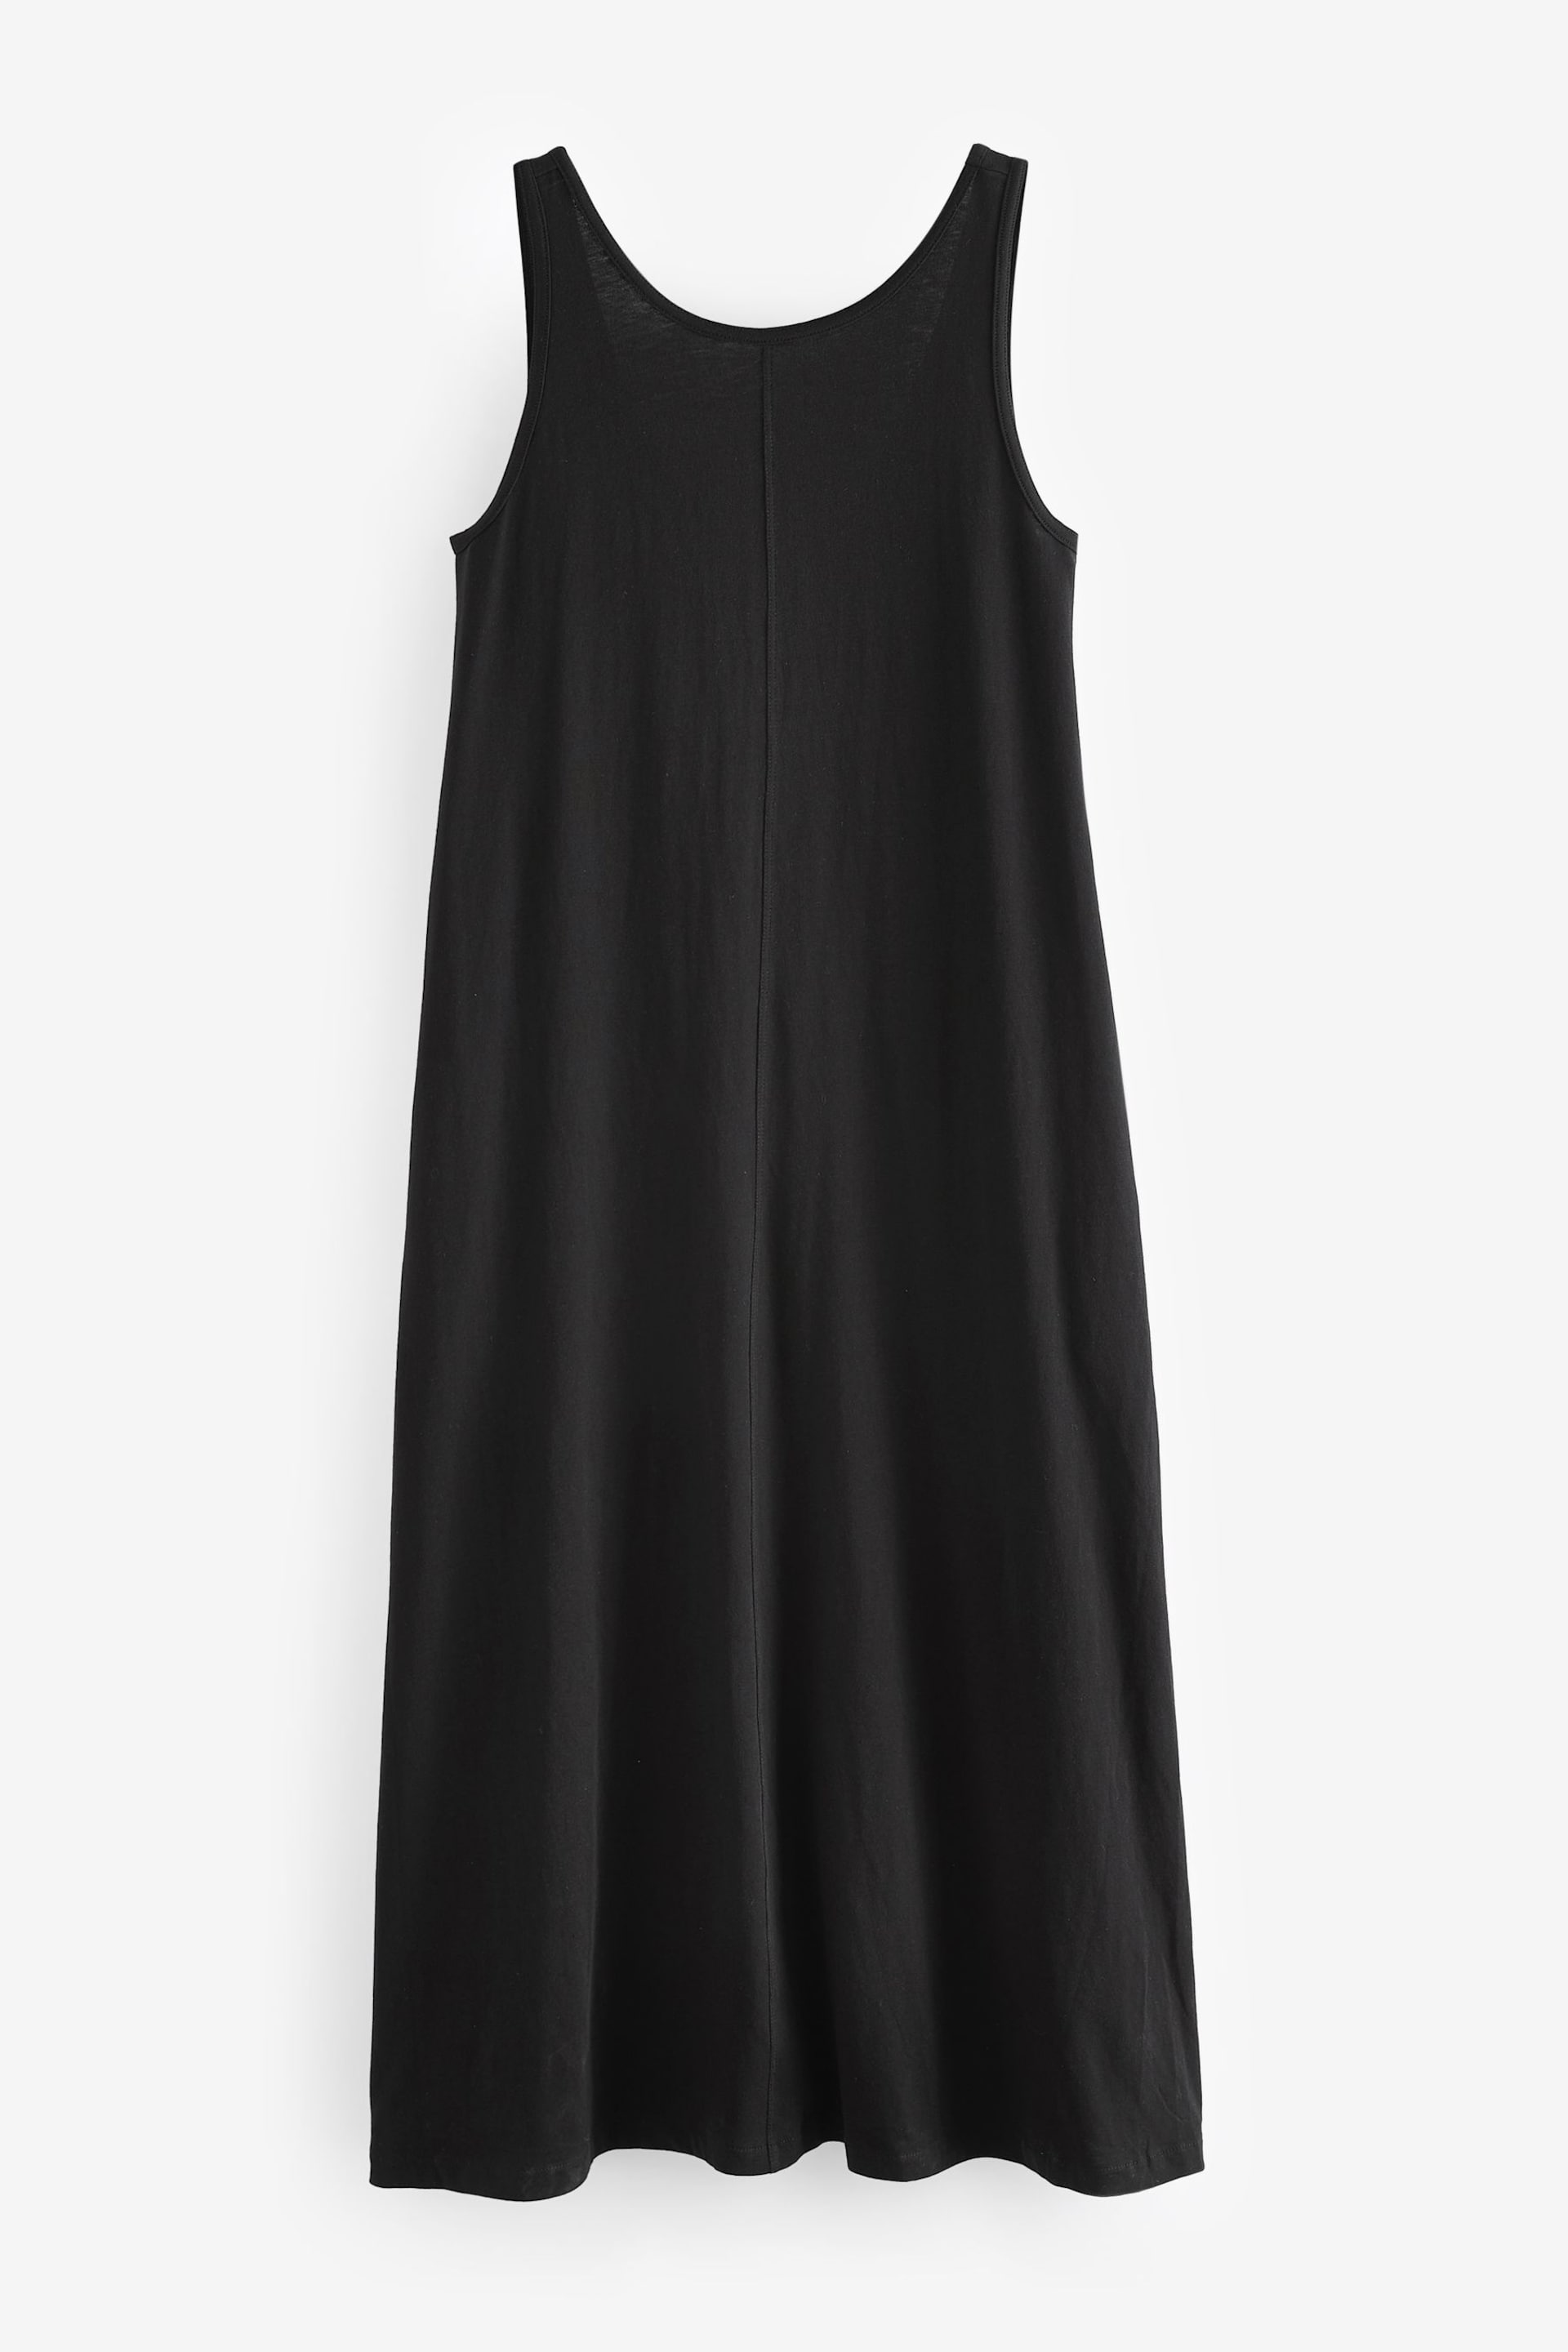 Black Sleeveless Jersey Dress - Image 5 of 6